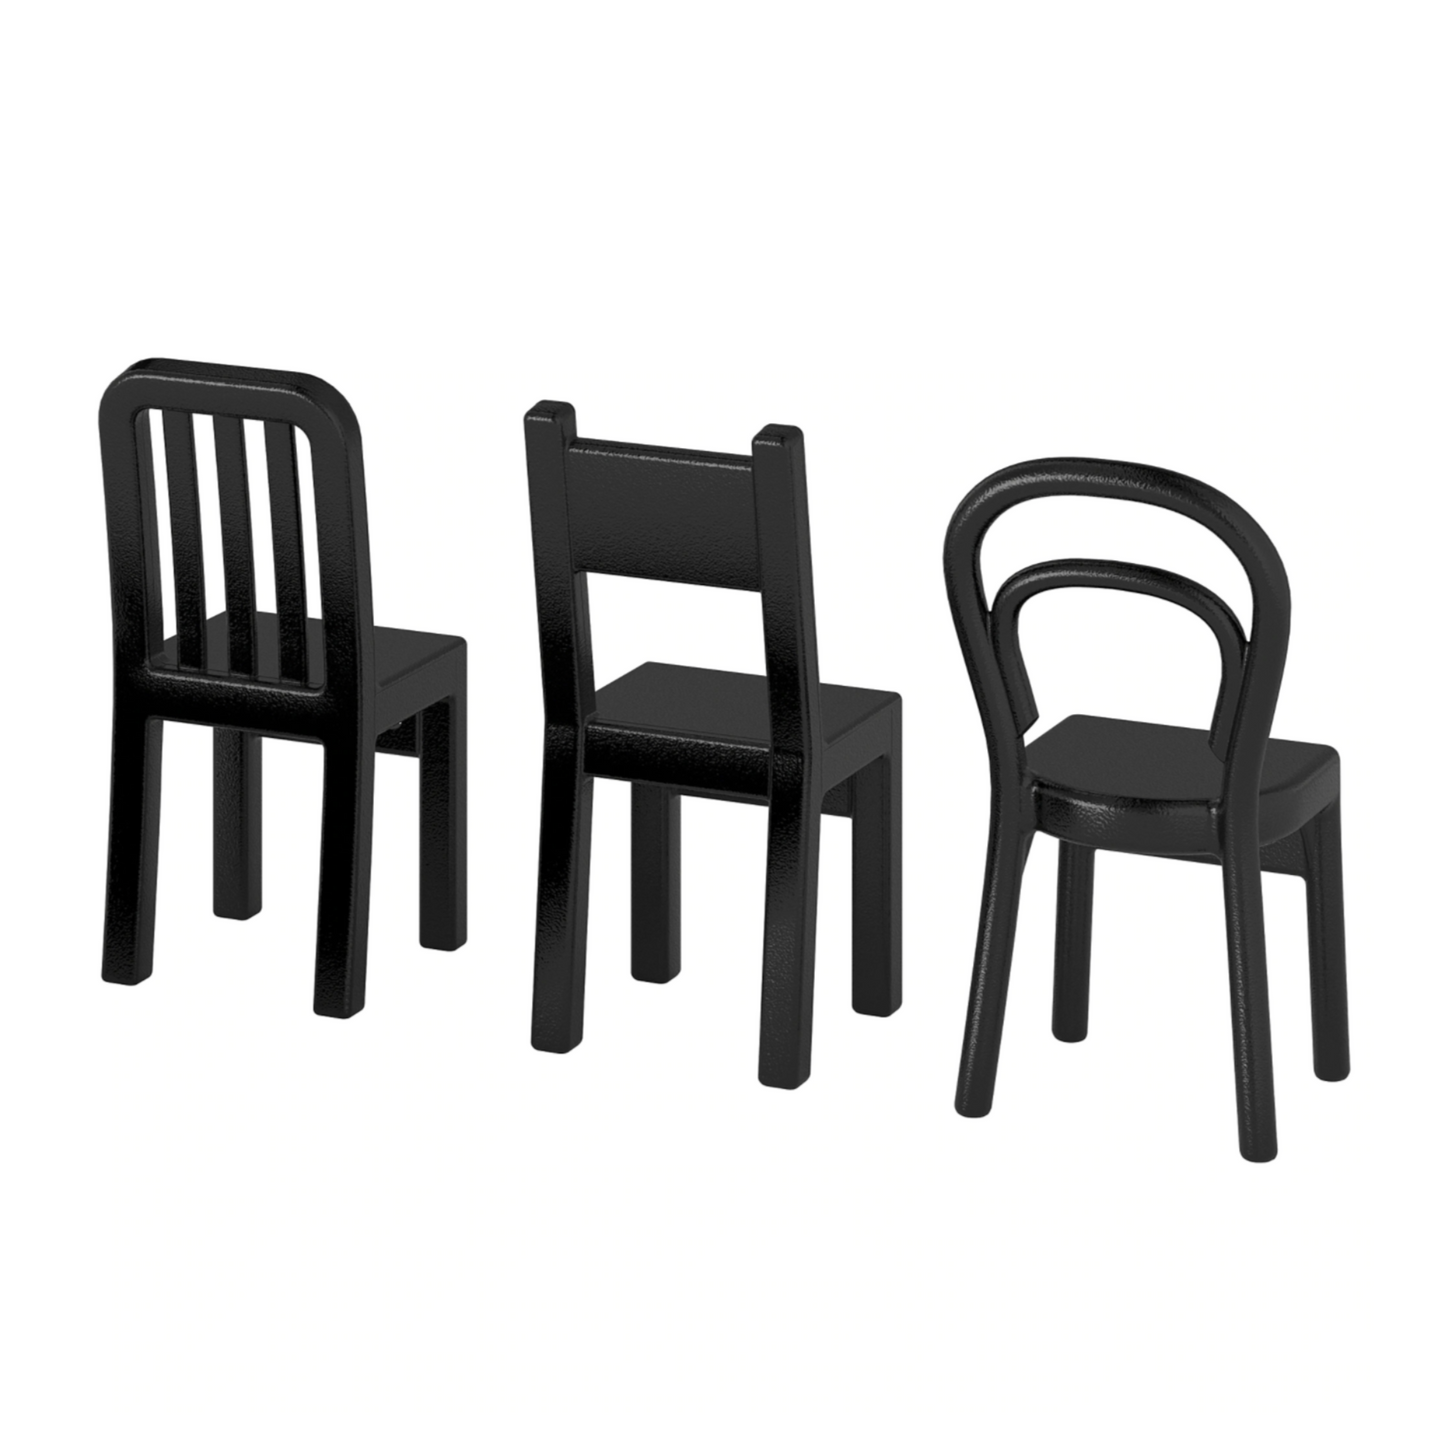 IKEA Fjantig Chair Hook 3-pack (4515610918977)